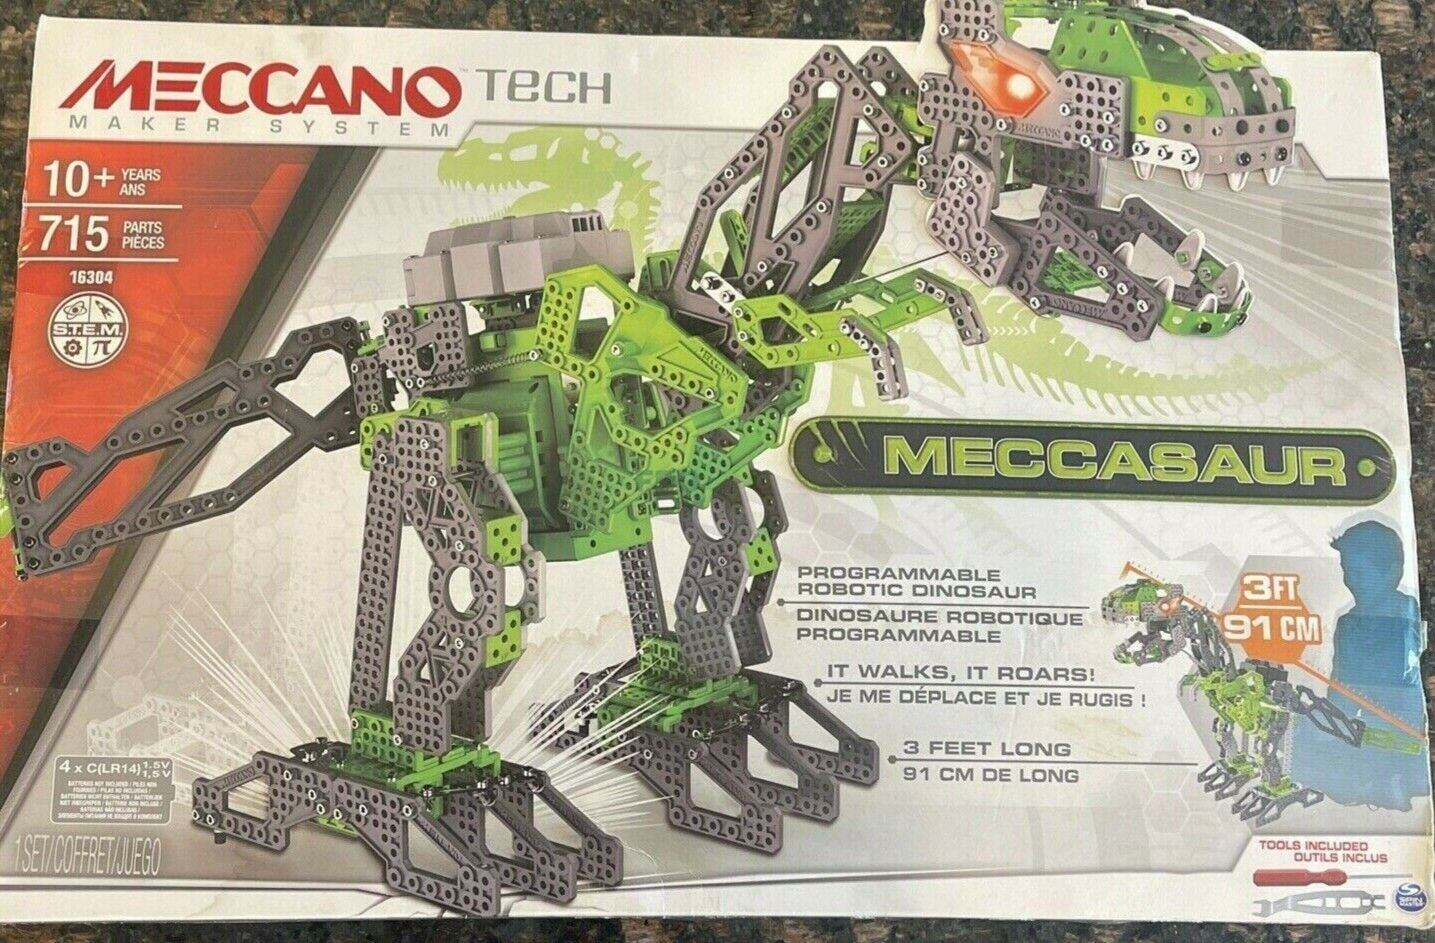  BRAND NEW! Meccano Tech 3' MECCASAUR 3 Foot Dinosaur Programmable Robotic..SALE